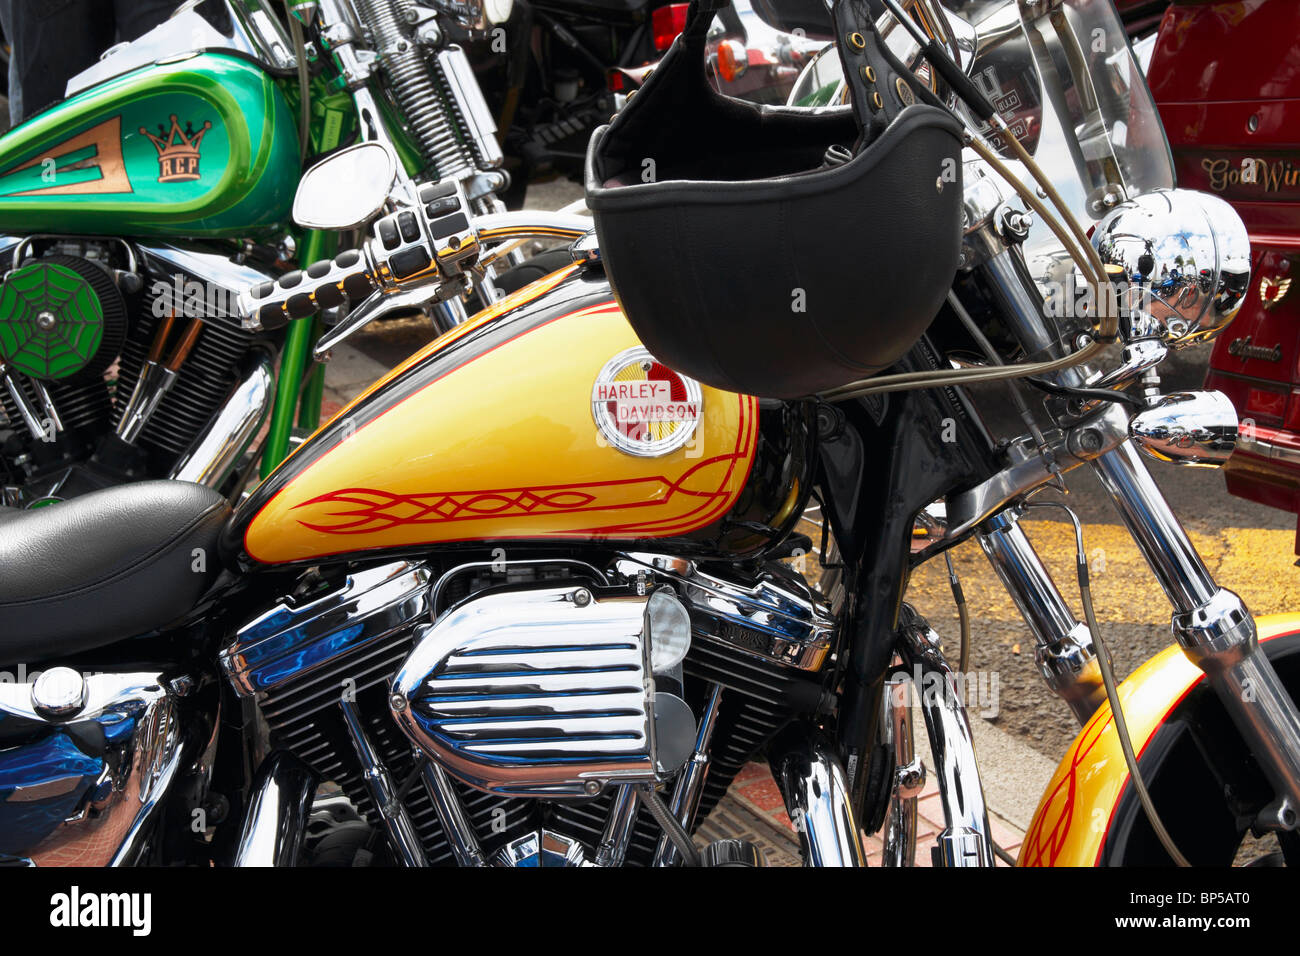 Harley Davidson motorcylce at Harley rally in Spain Stock Photo